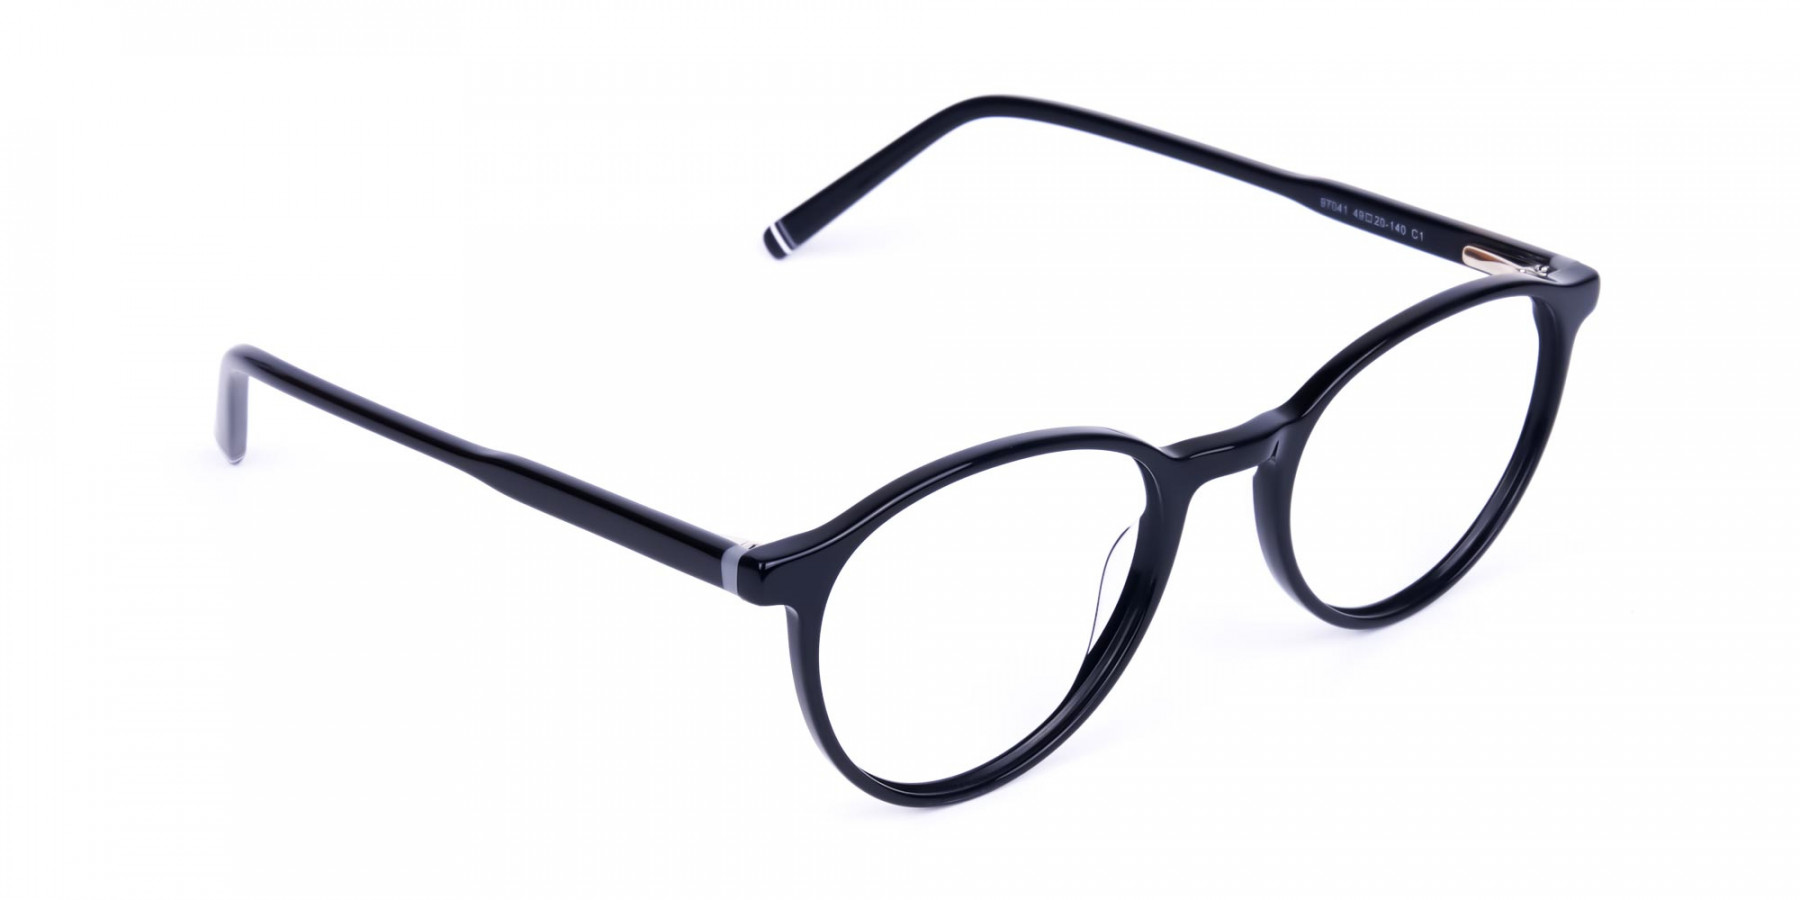 Classic-Black-Rimmed-Round-Glasses-1